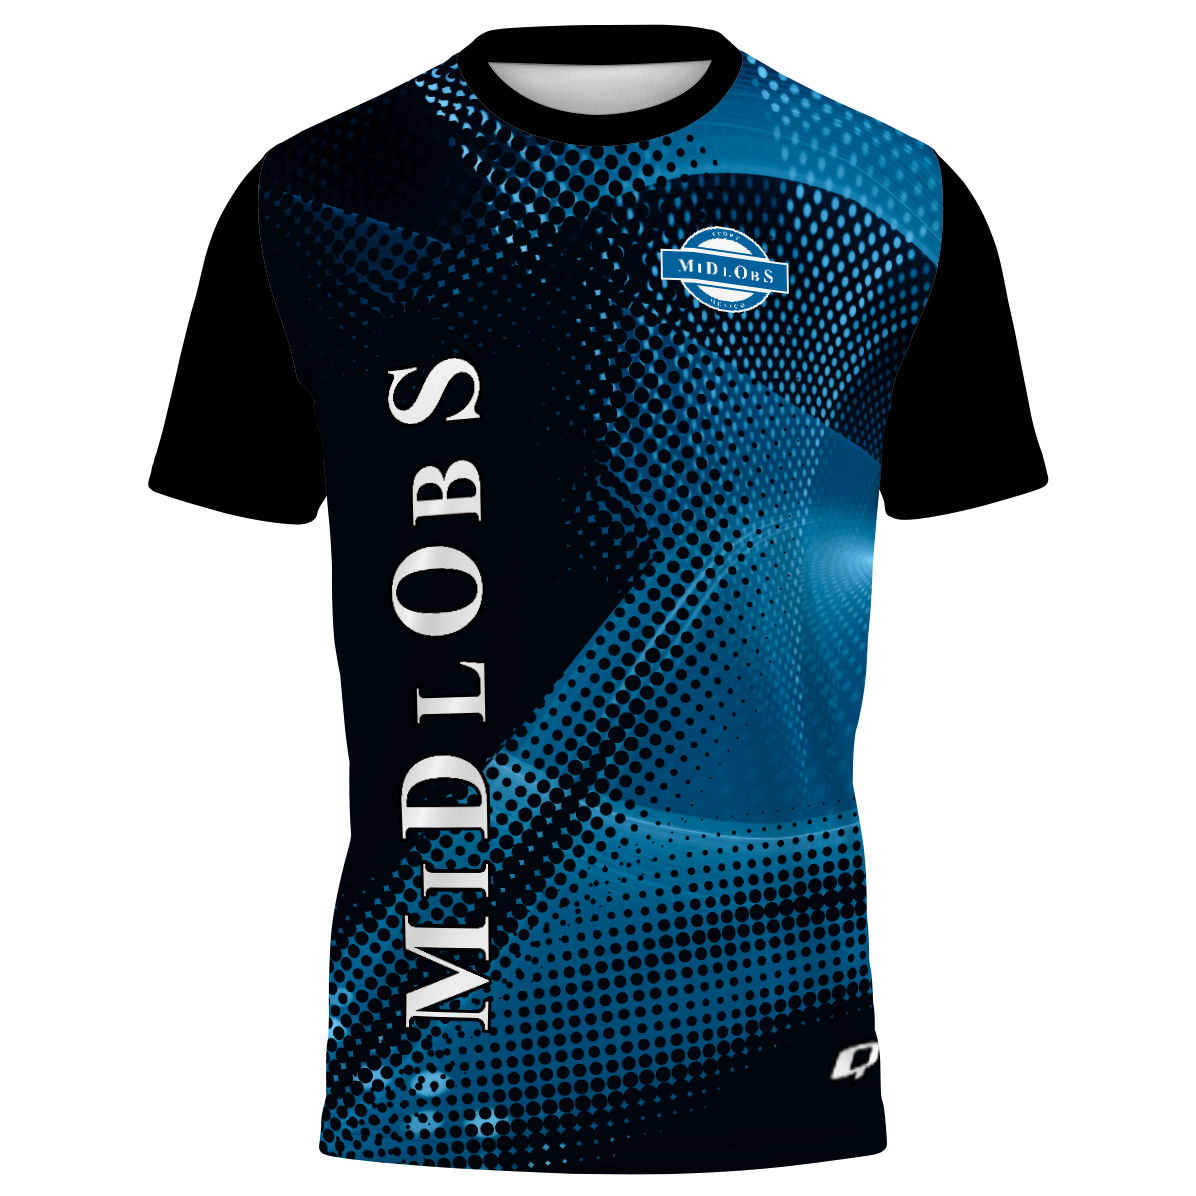 Midlobs - Men's Performance Shirt